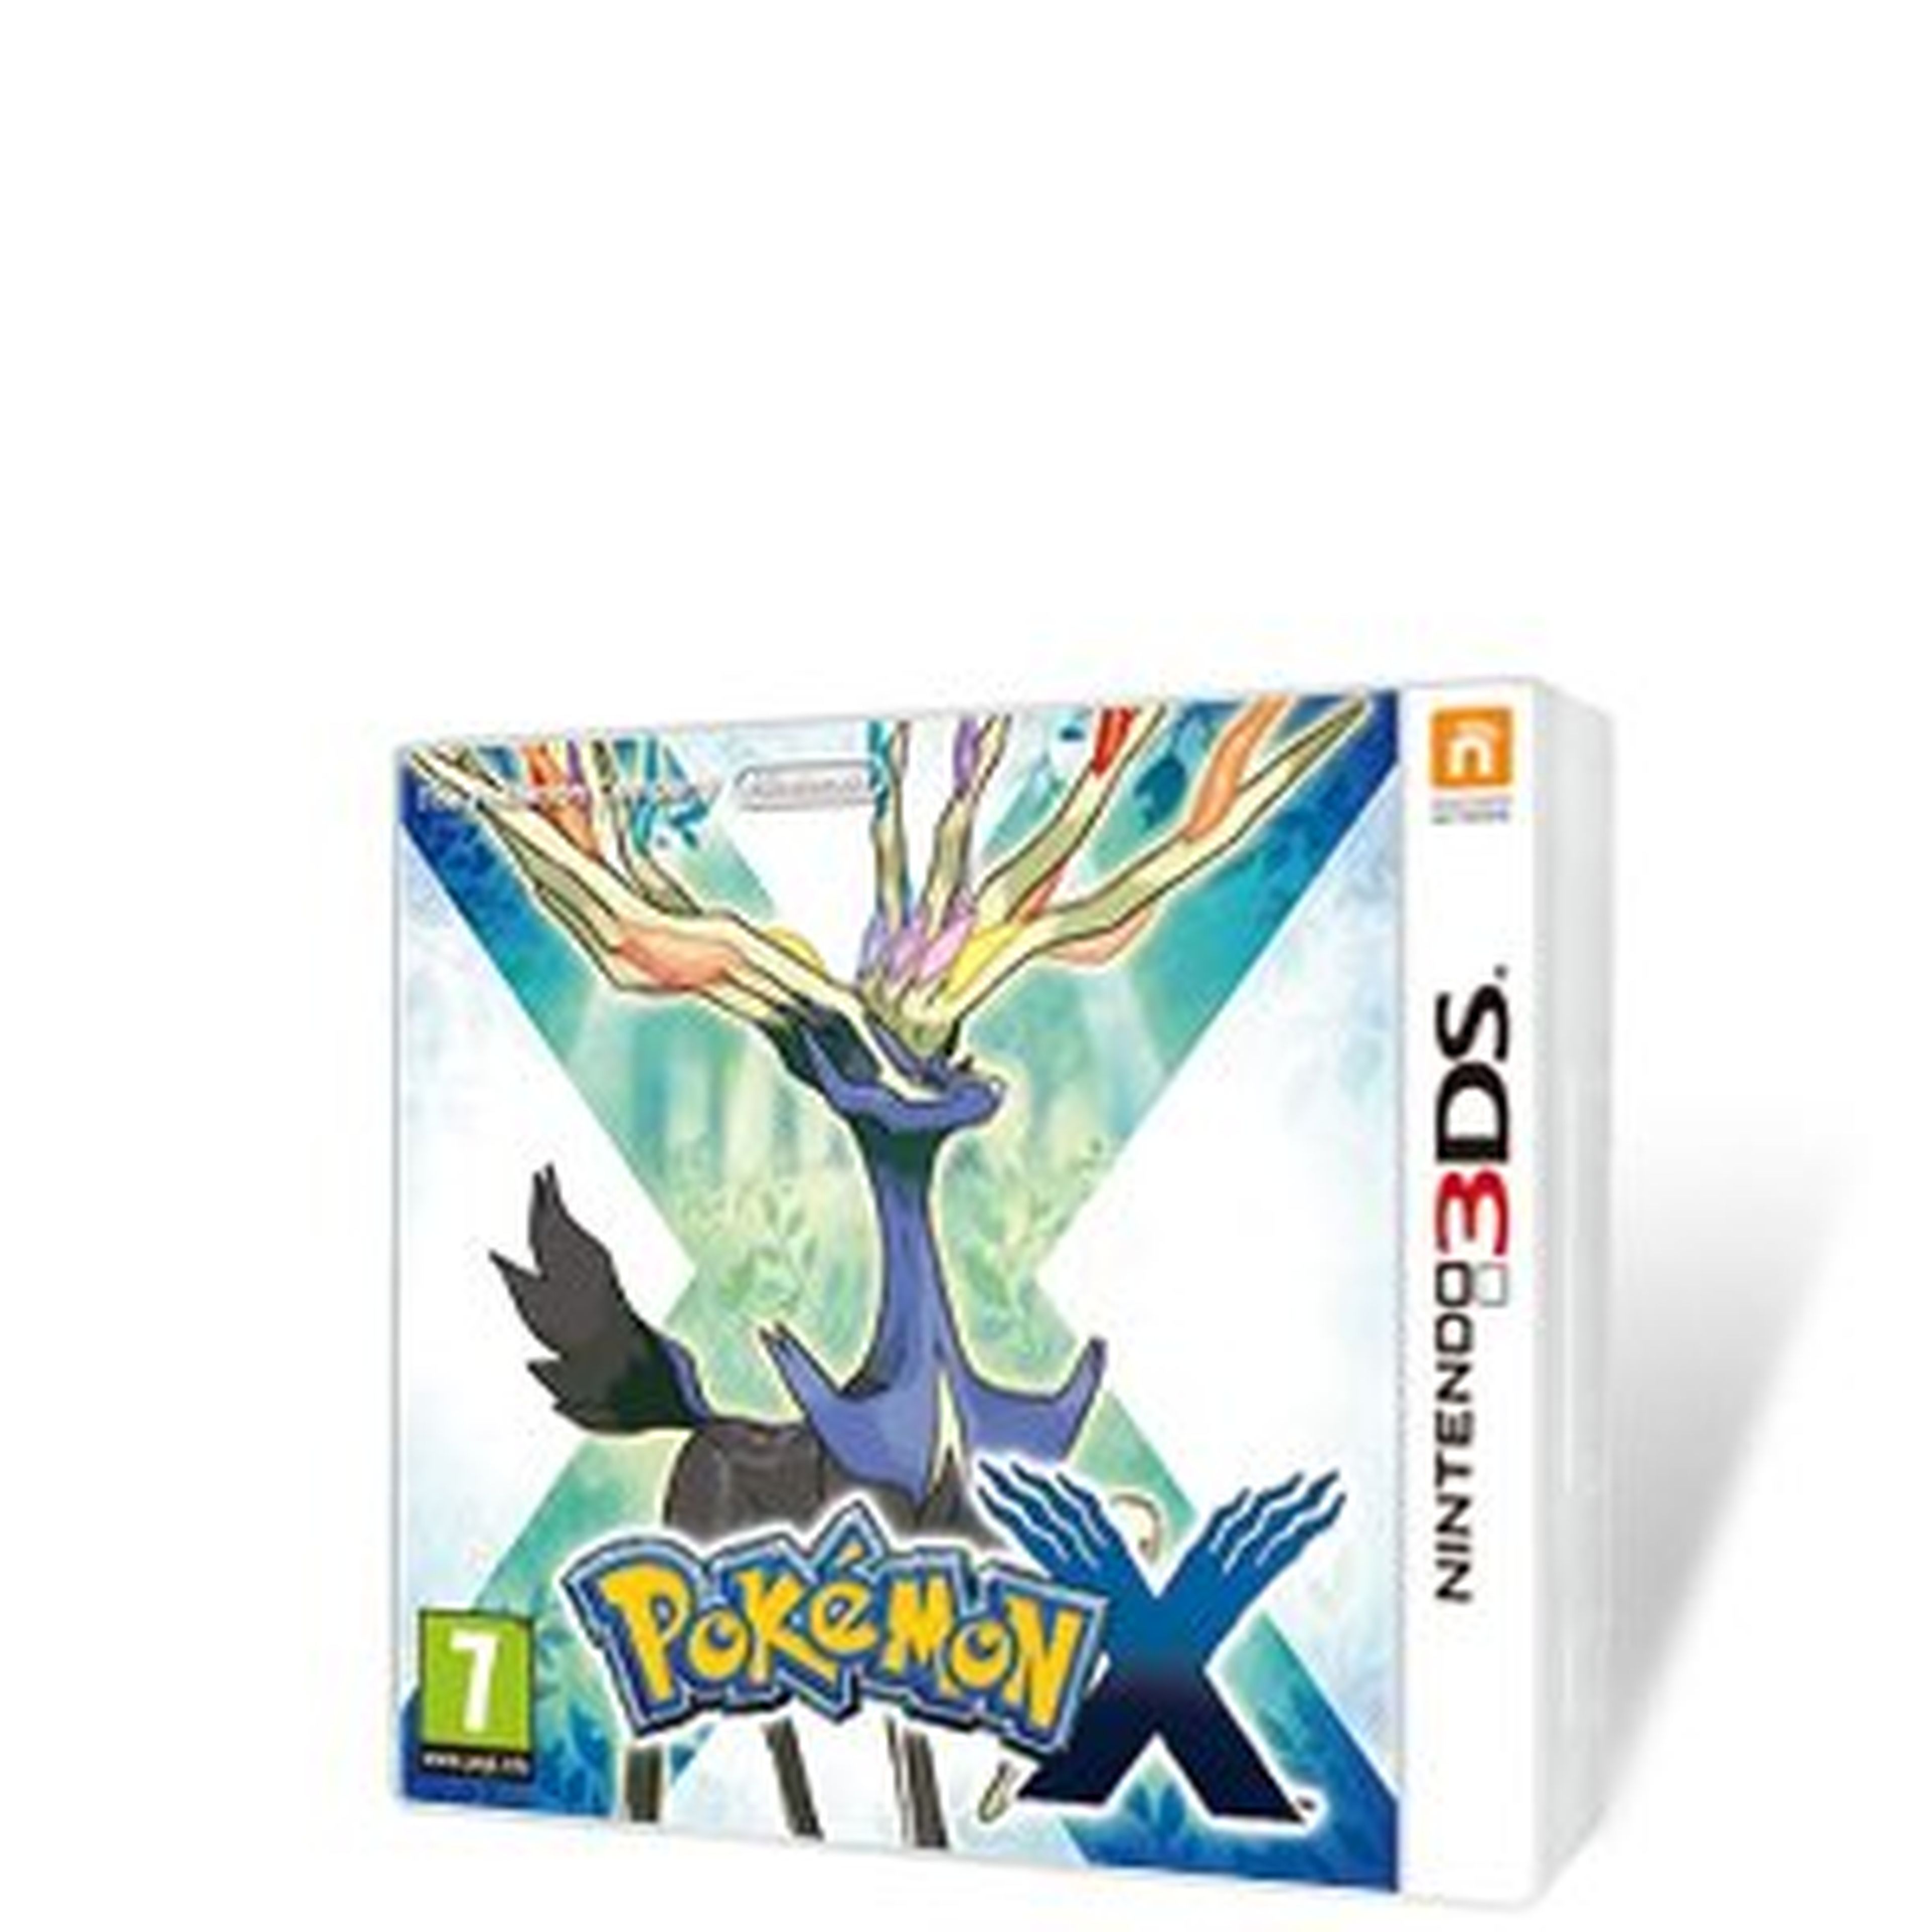 Pokémon X para 3DS